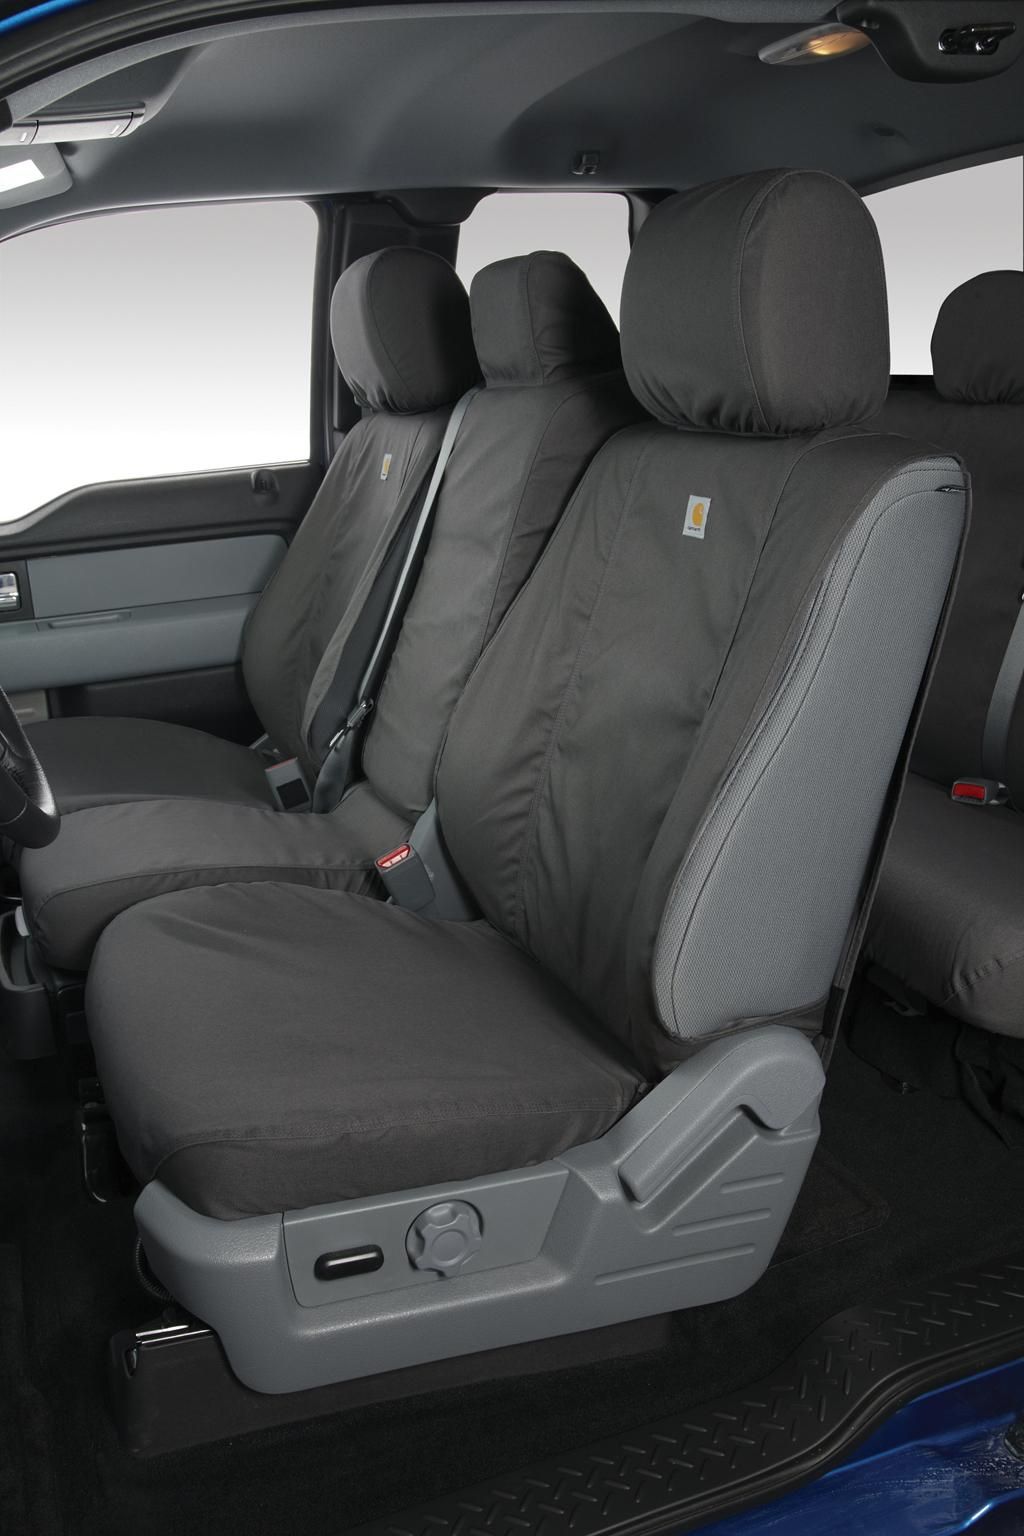 Seat Covers - Carhartt, Rear, Gravel